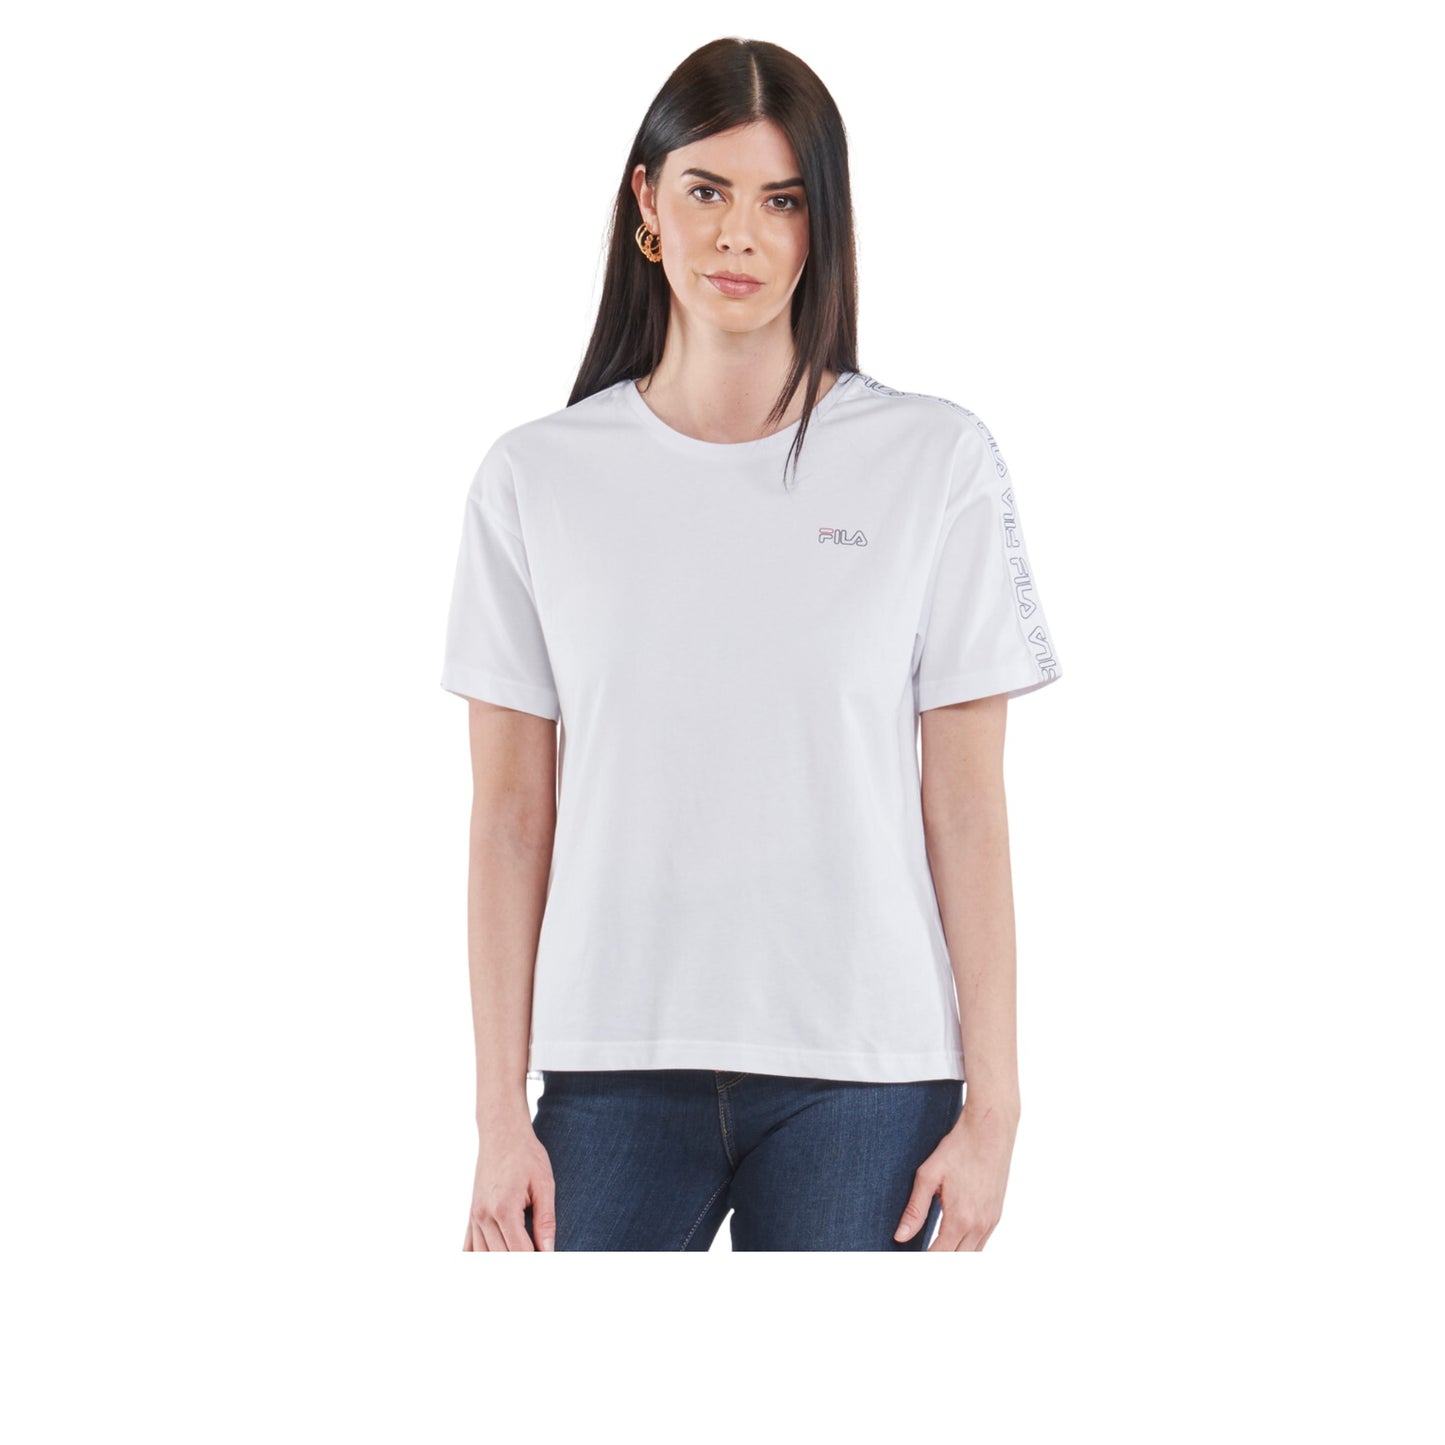 fila camiseta mujer m67 blanco